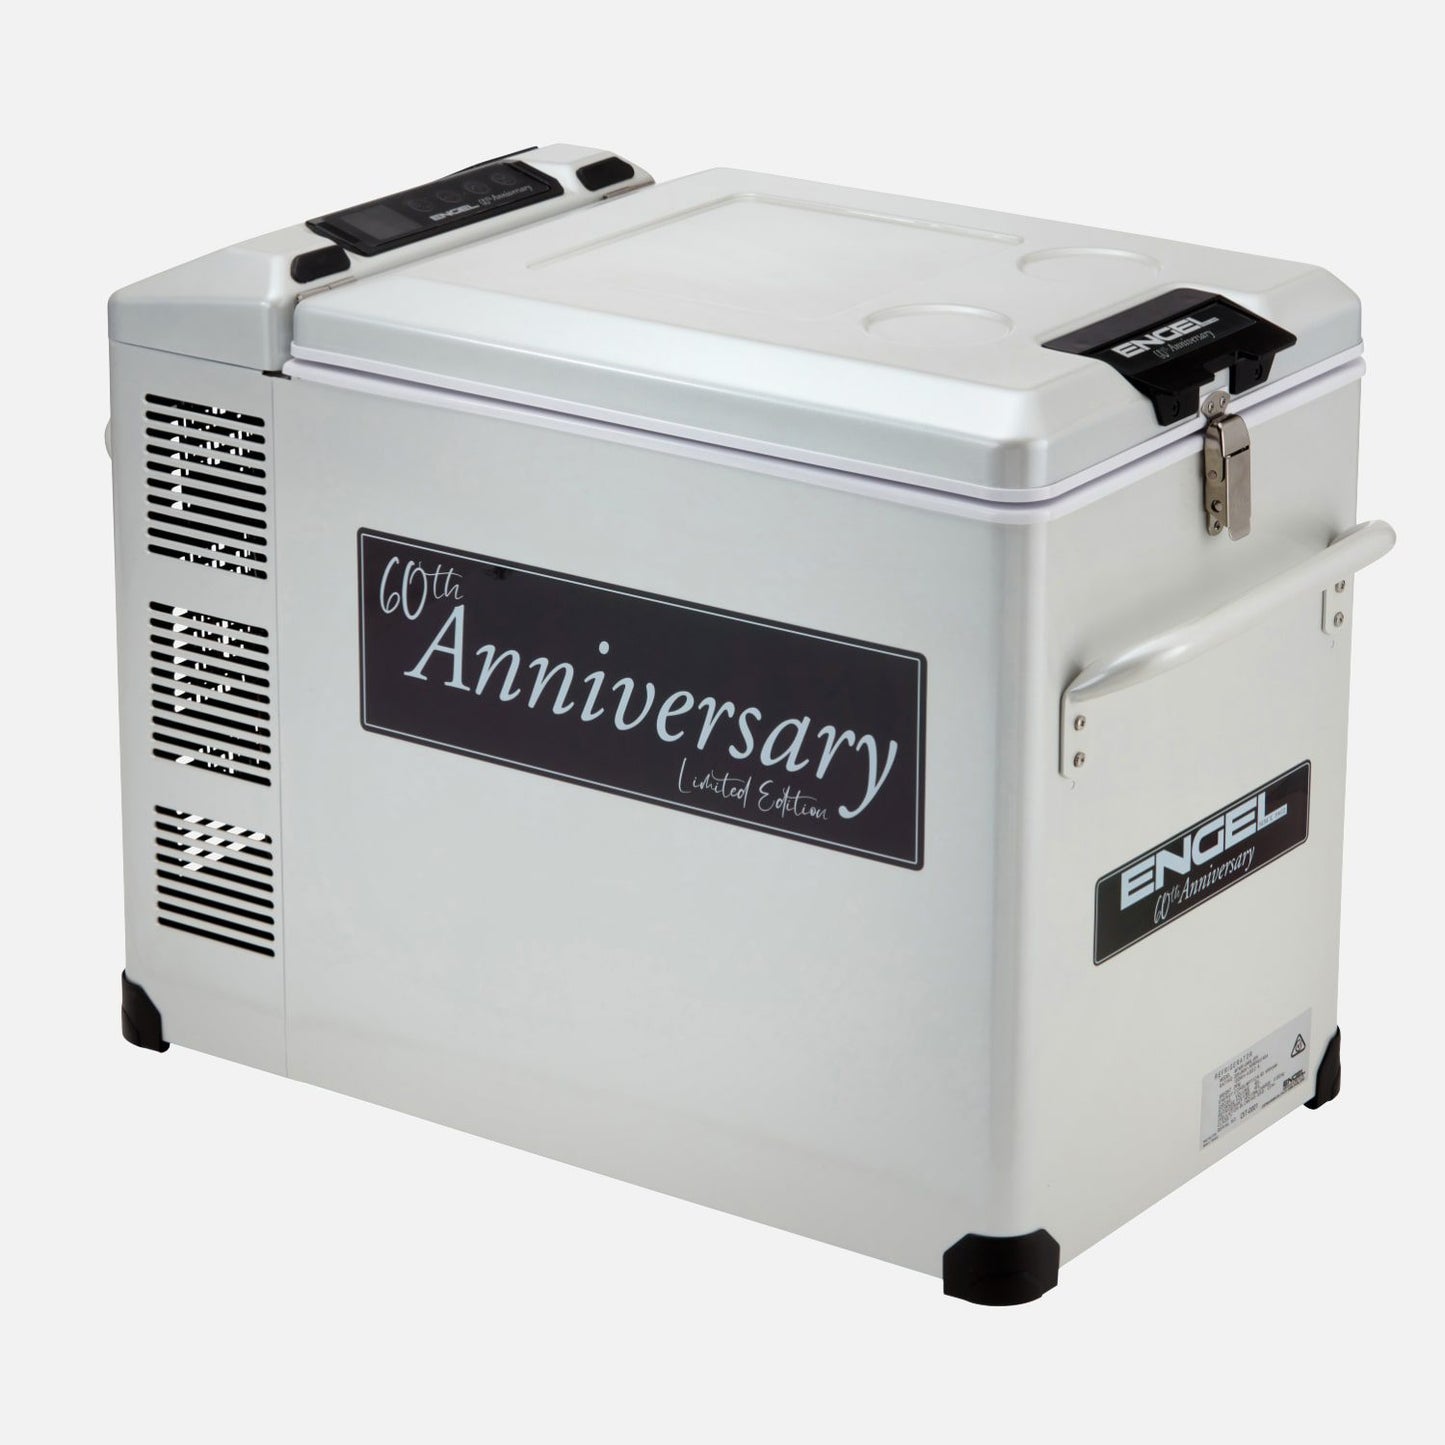 Engel 60th Anniversary Edition 40 Litre Portable Fridge-Freezer